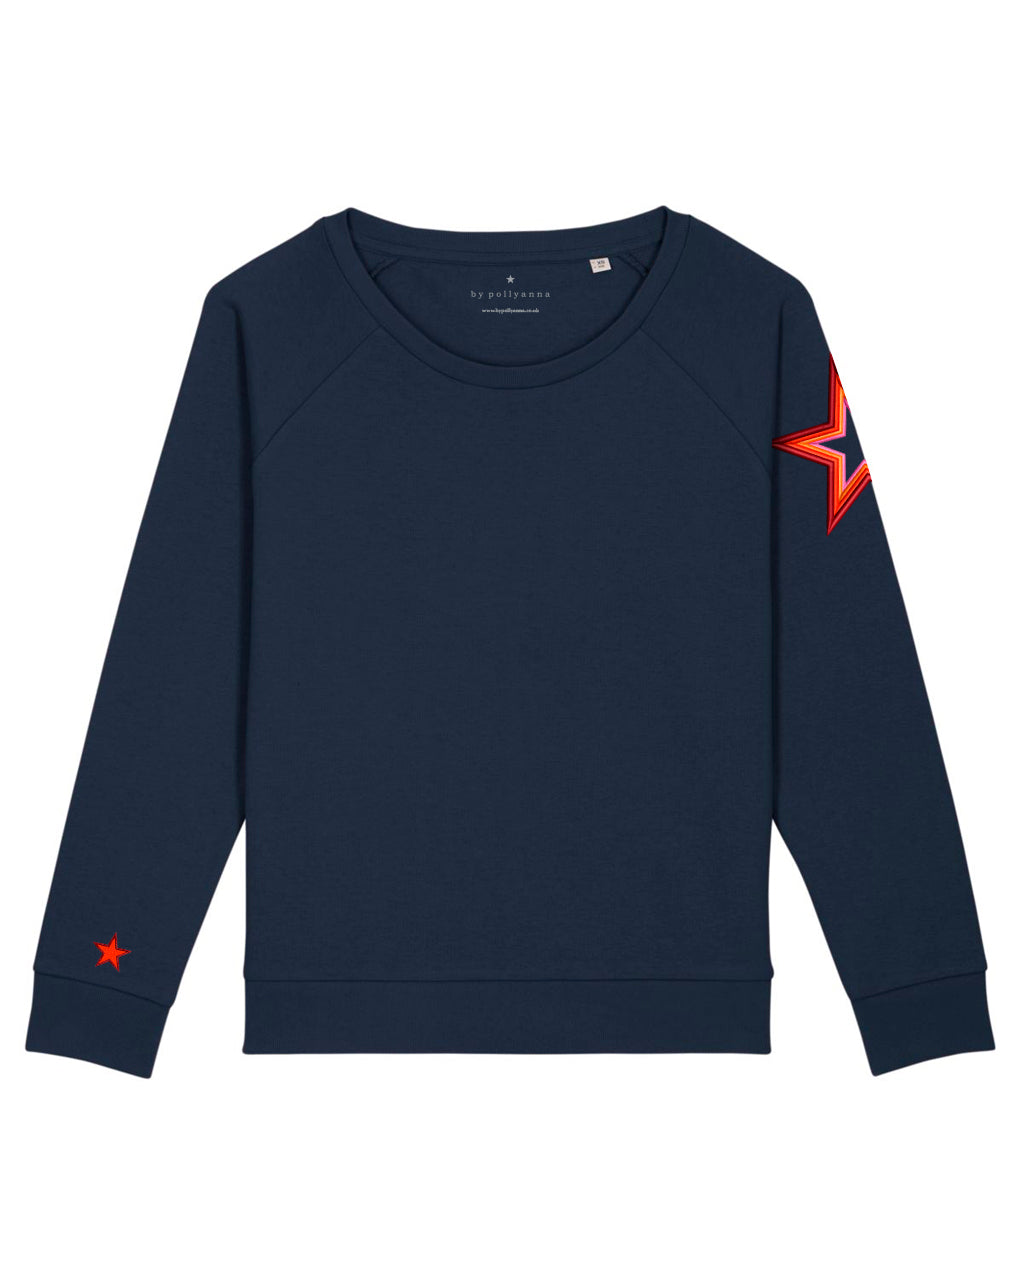 Navy Arm Star Sweatshirt - MADE TO ORDER